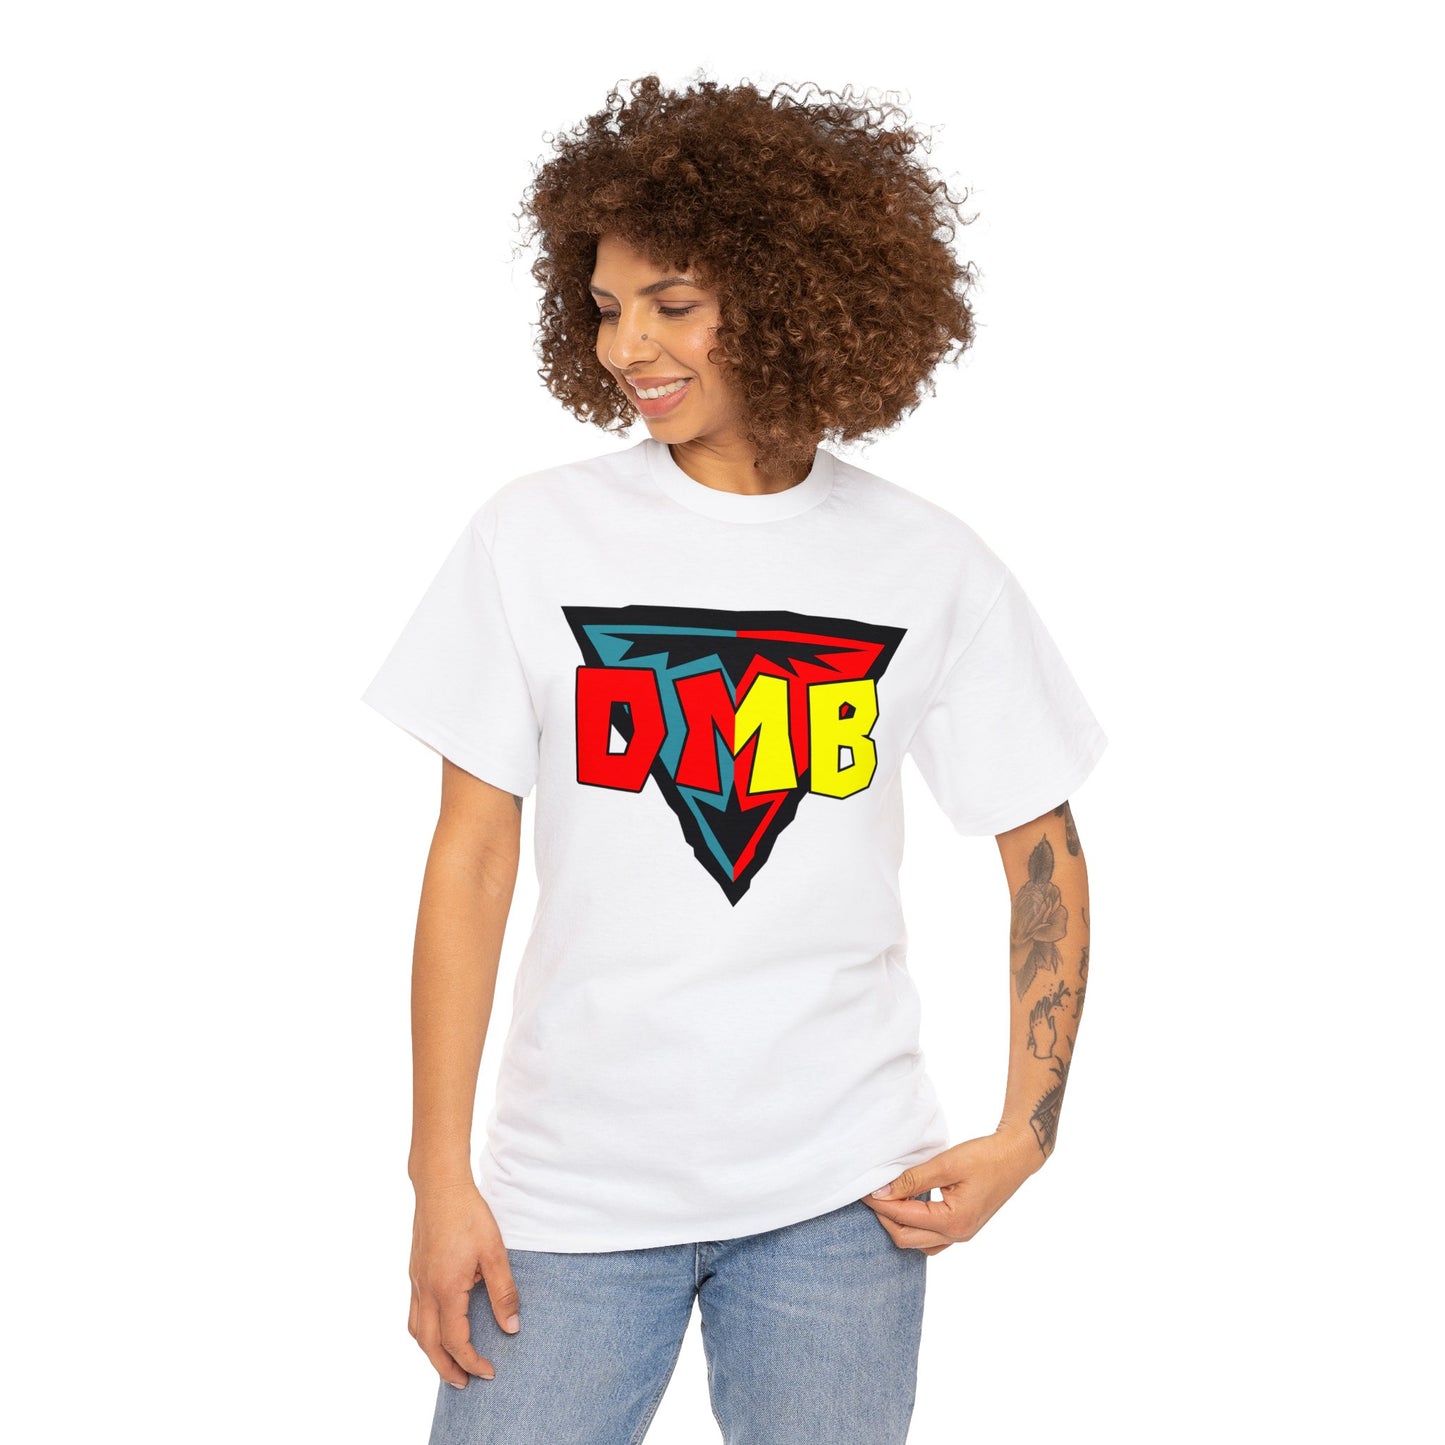 Dave Matthews Band Concert Tour 90s T-shirt for Sale